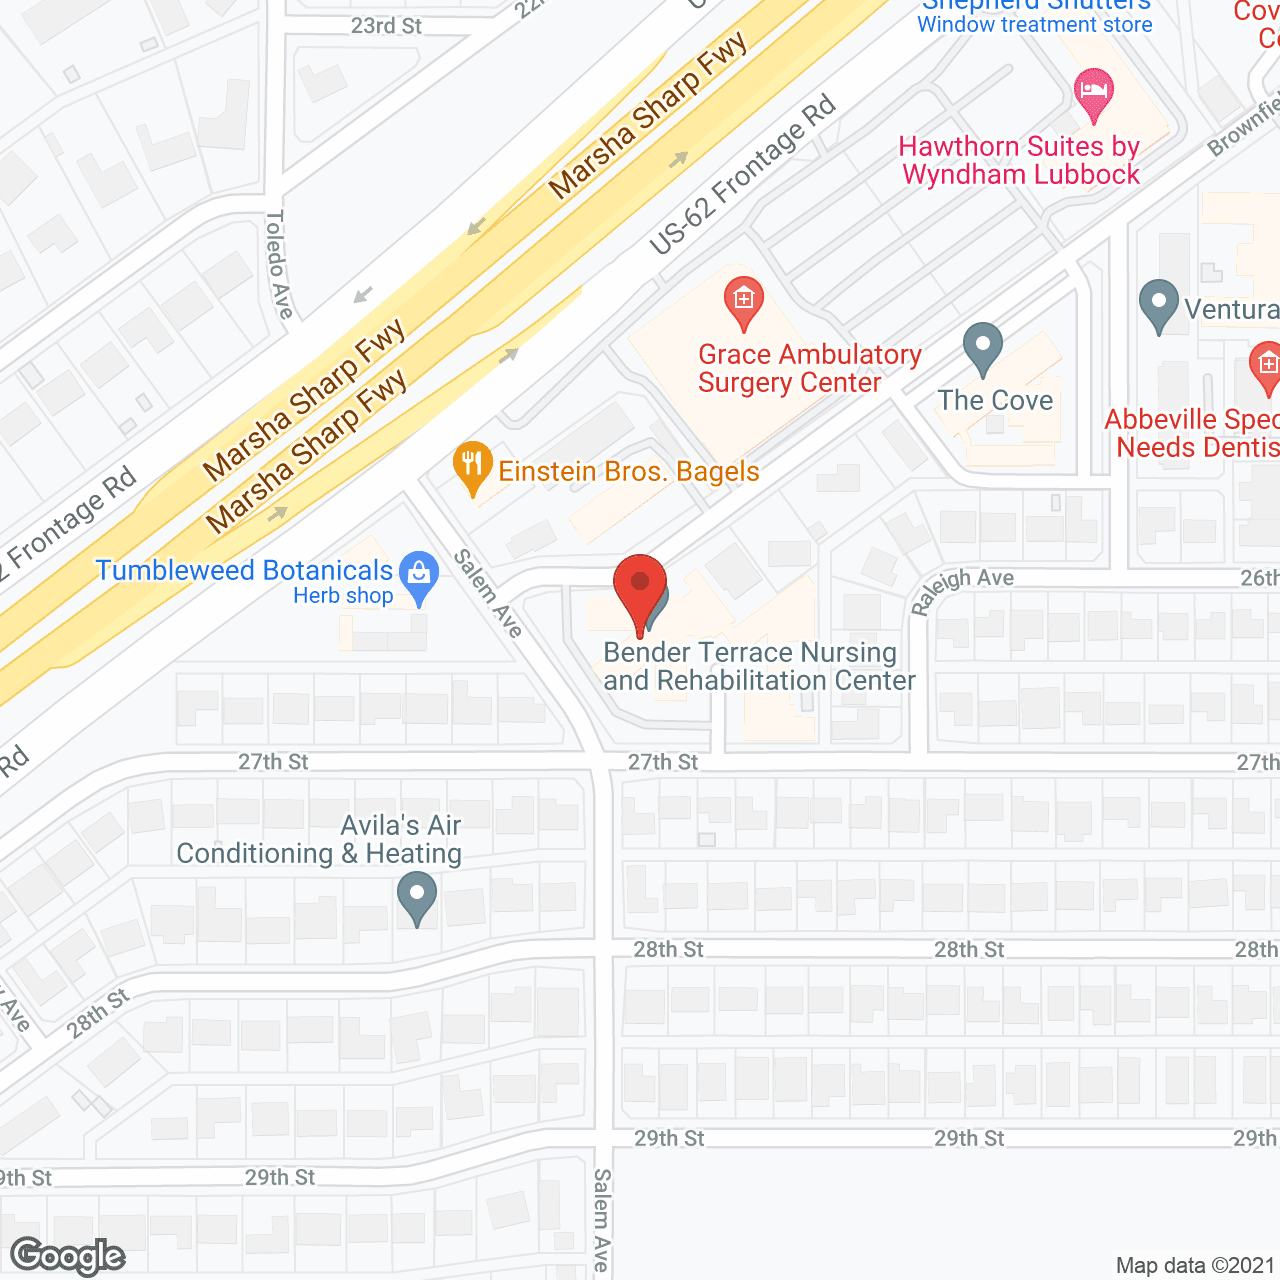 Bender Terrace in google map